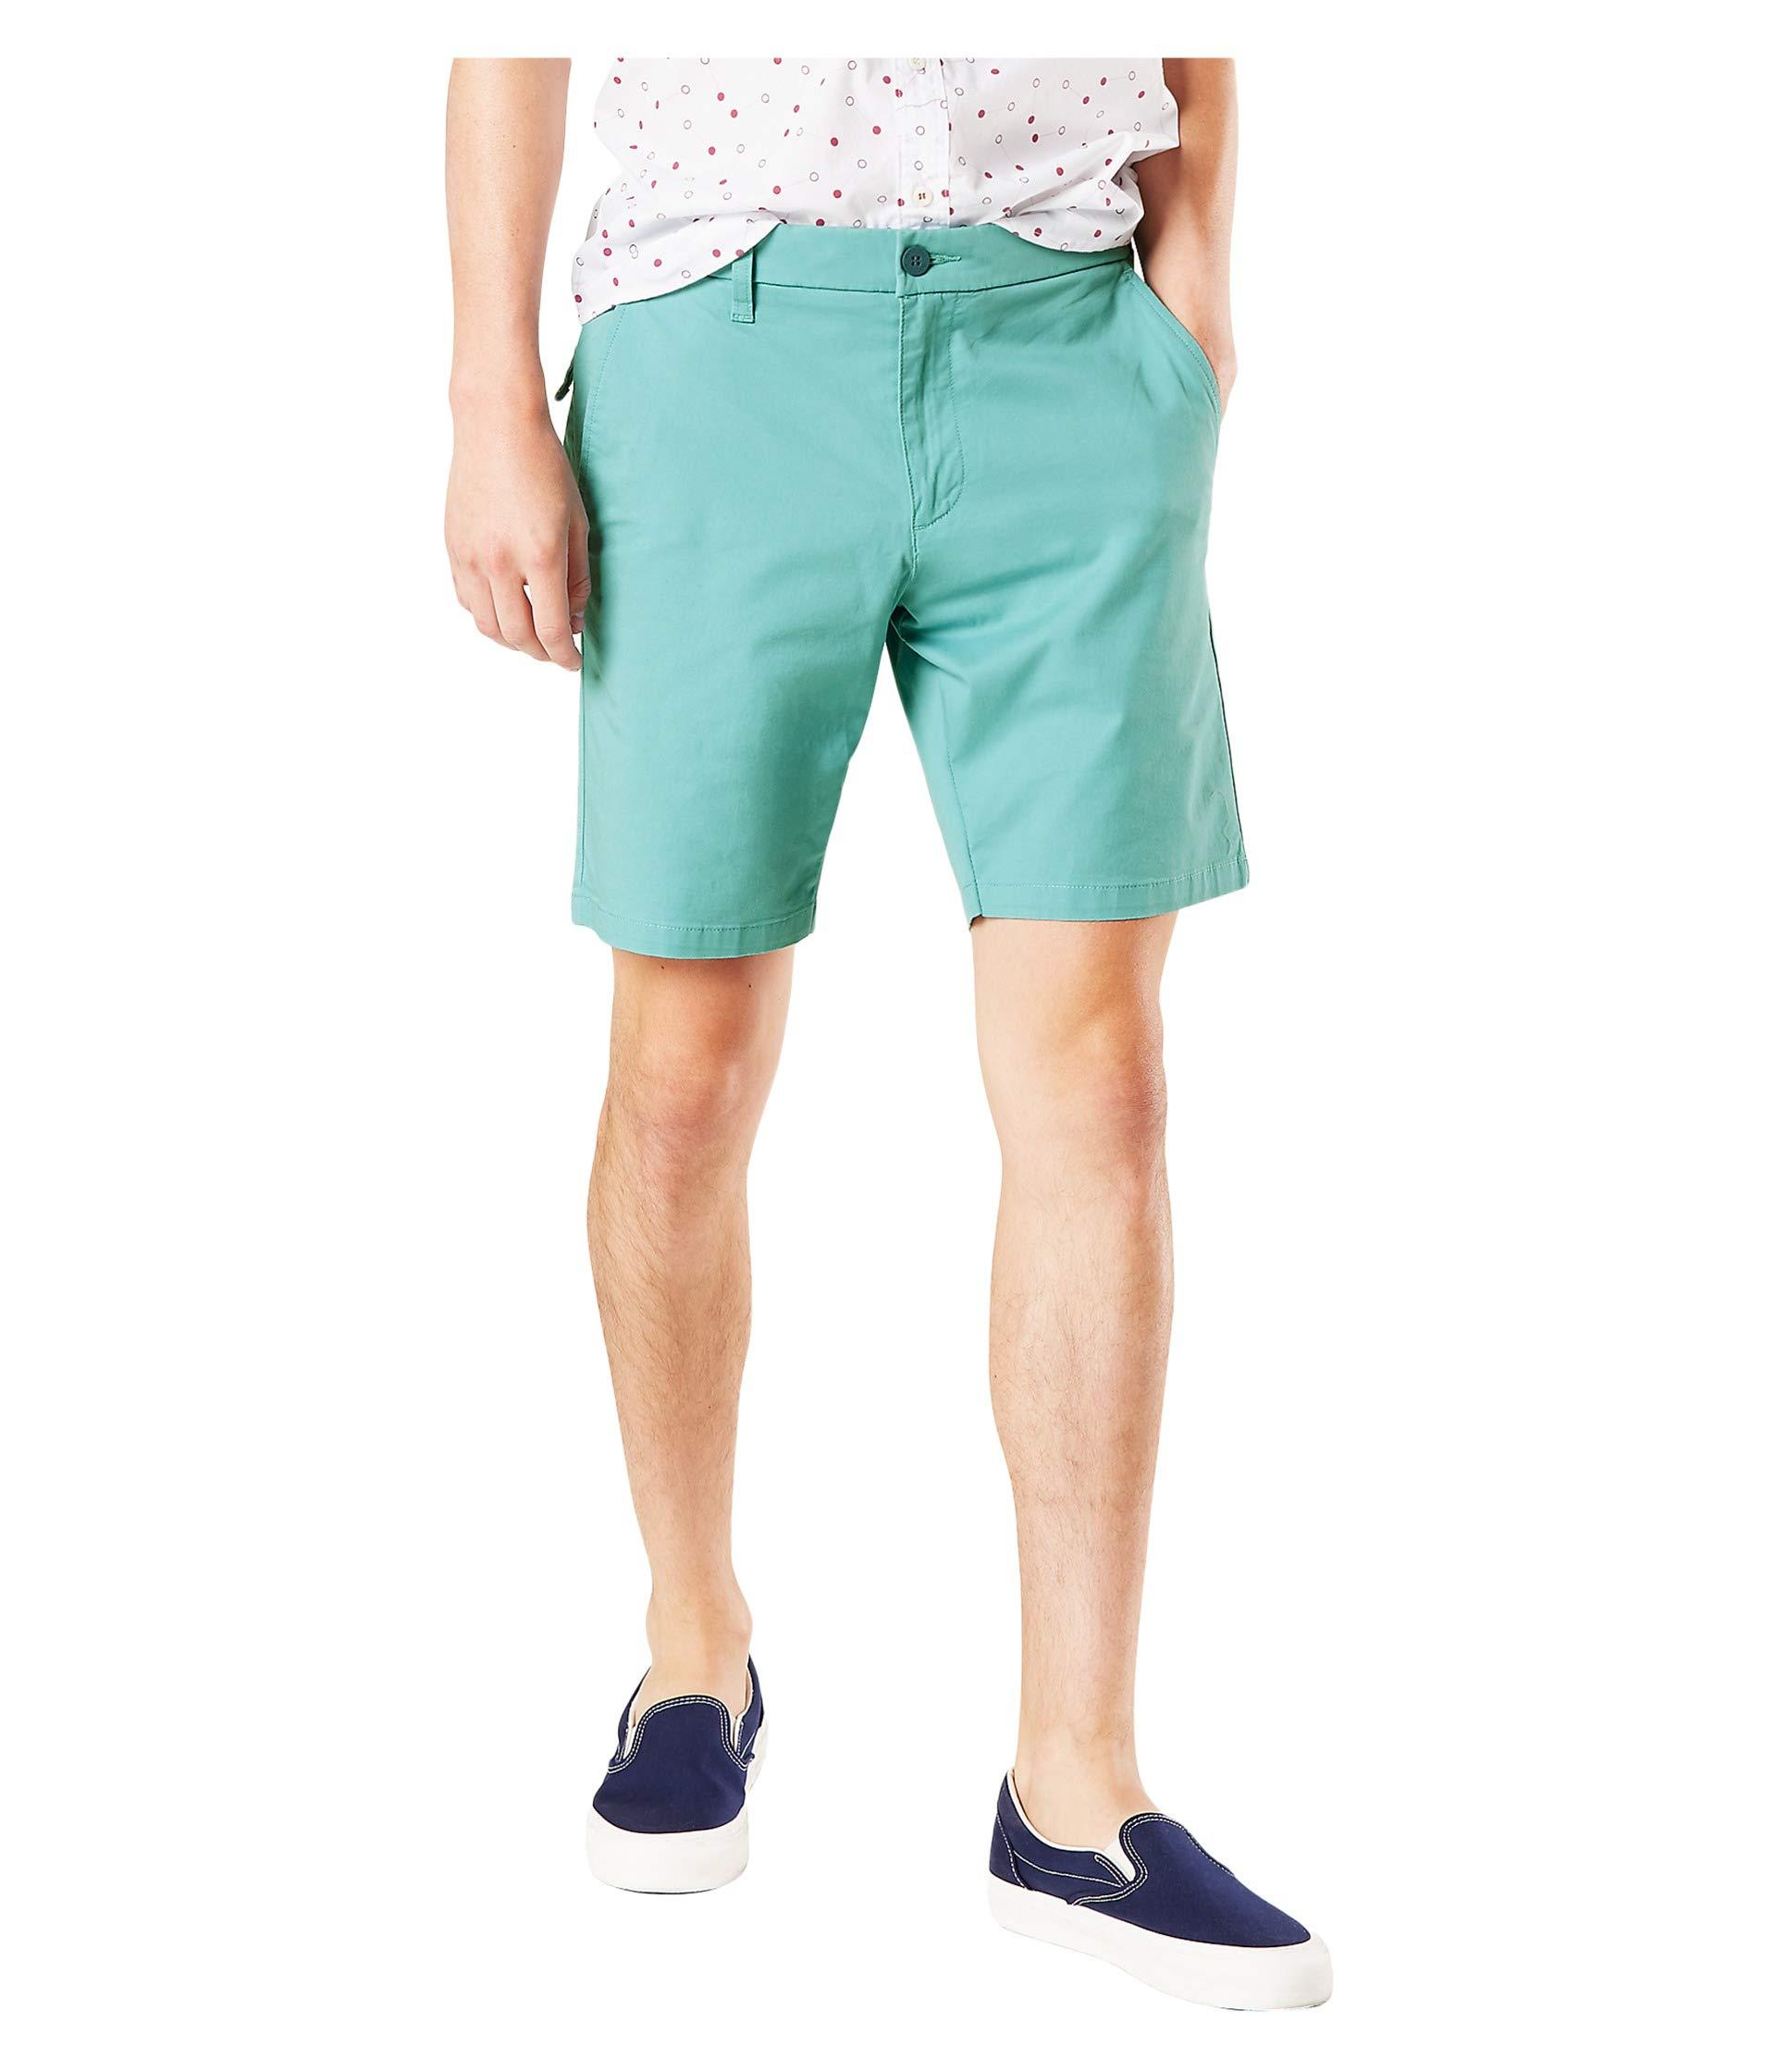 Dockers Cotton Supreme Flex Ultimate Shorts in Blue for Men - Lyst